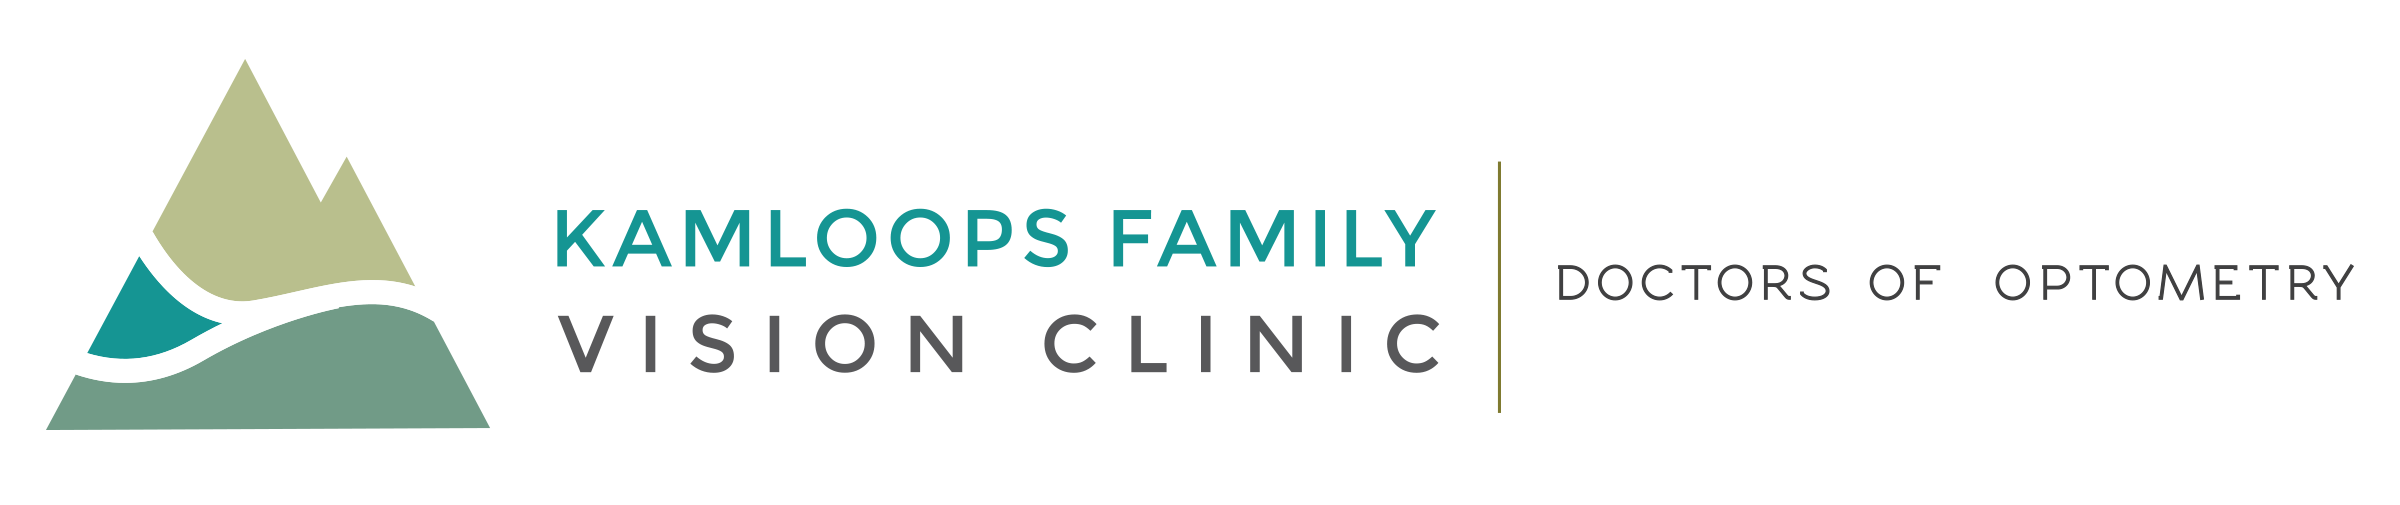 Kamloops Family Vision Clinic